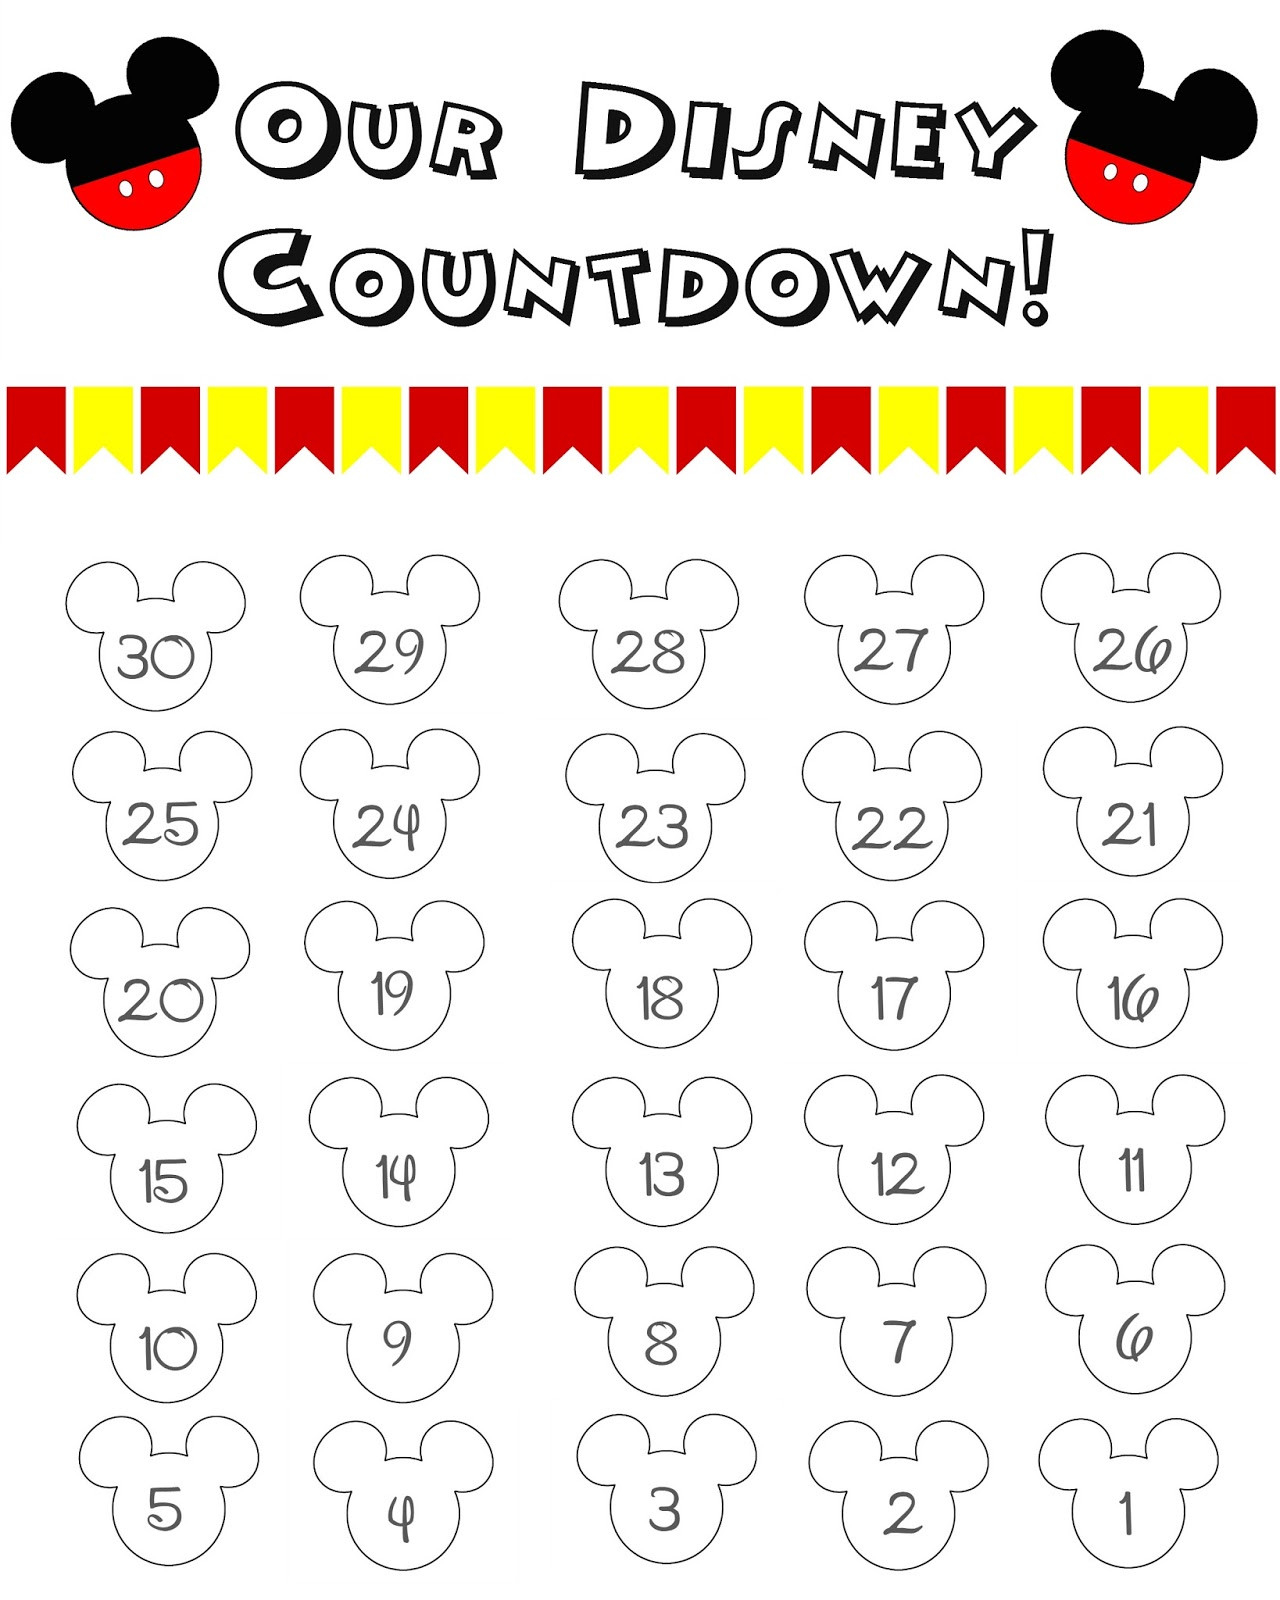 10 Fun Printable Disney Countdown Calendars - Kitty Baby Love-Mickey Mouse Calendar February 2021 Free